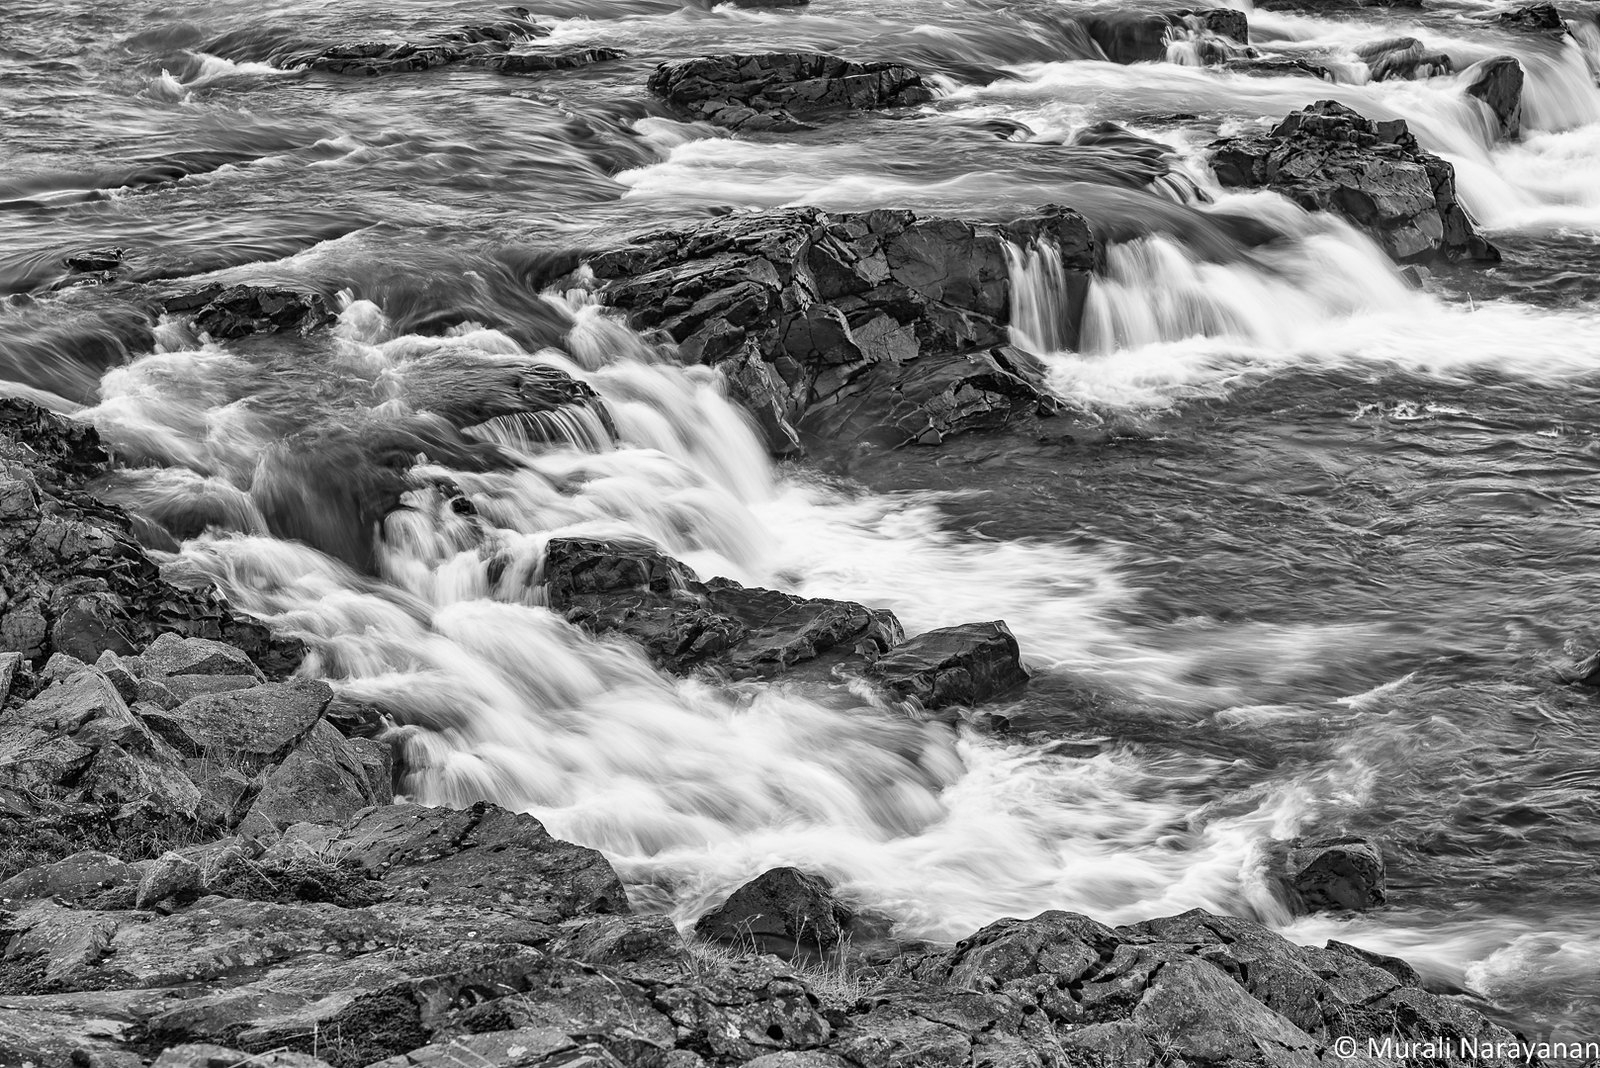 Image of Urridafoss Waterfall by Murali Narayanan